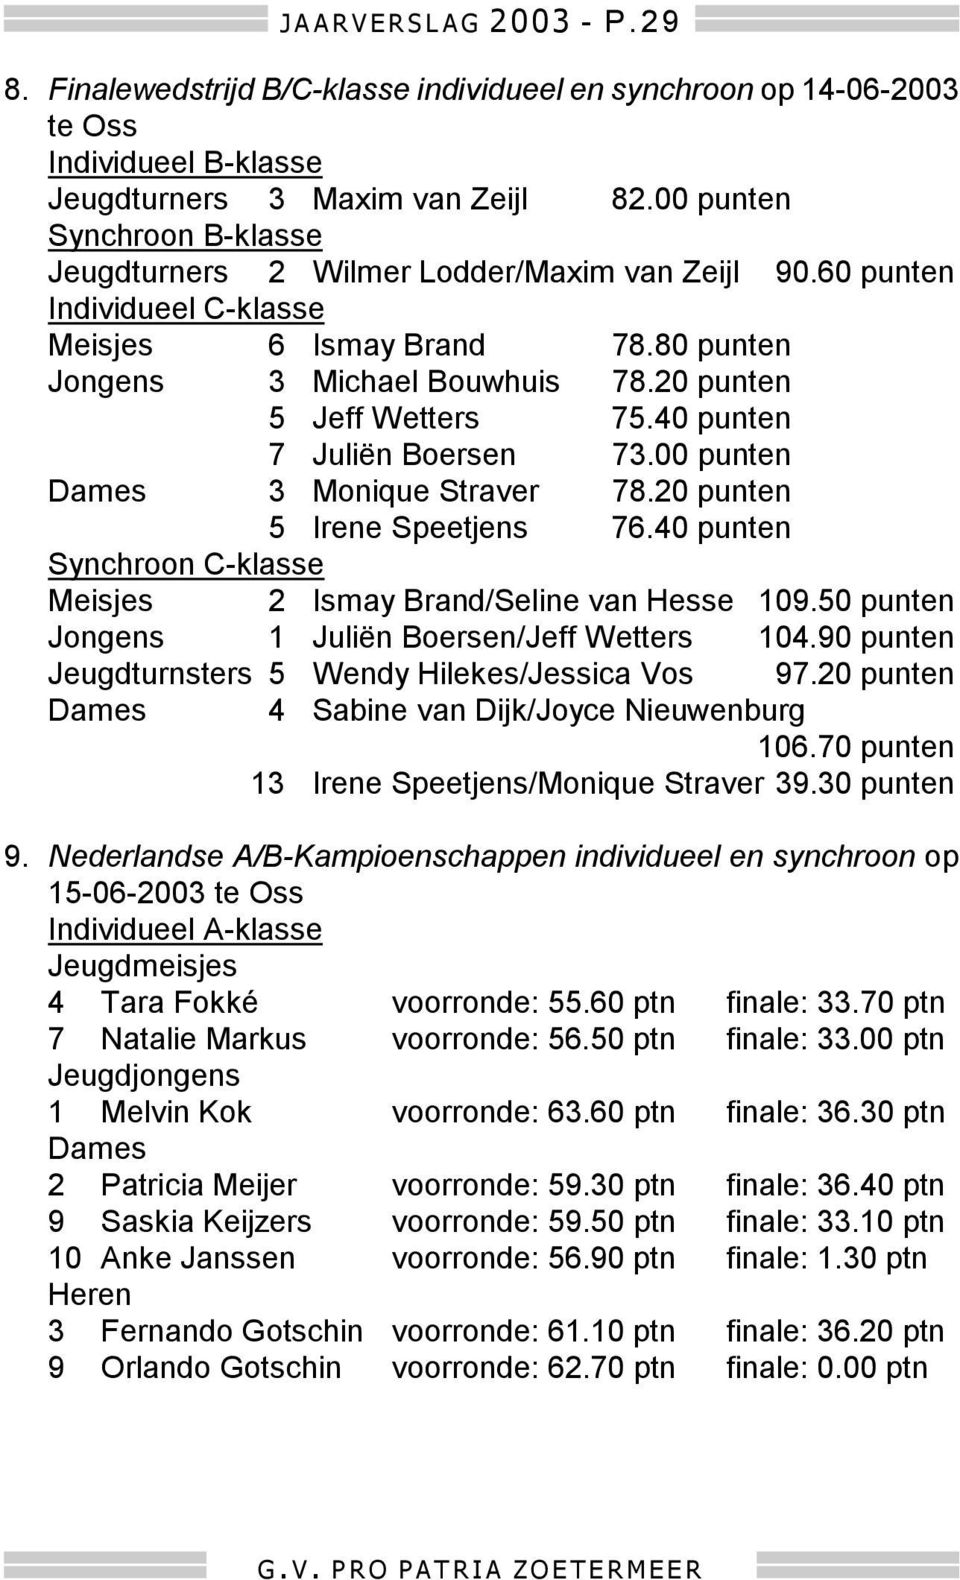 20 punten 5 Jeff Wetters 75.40 punten 7 Juliën Boersen 73.00 punten Dames 3 Monique Straver 78.20 punten 5 Irene Speetjens 76.40 punten Synchroon C-klasse Meisjes 2 Ismay Brand/Seline van Hesse 109.